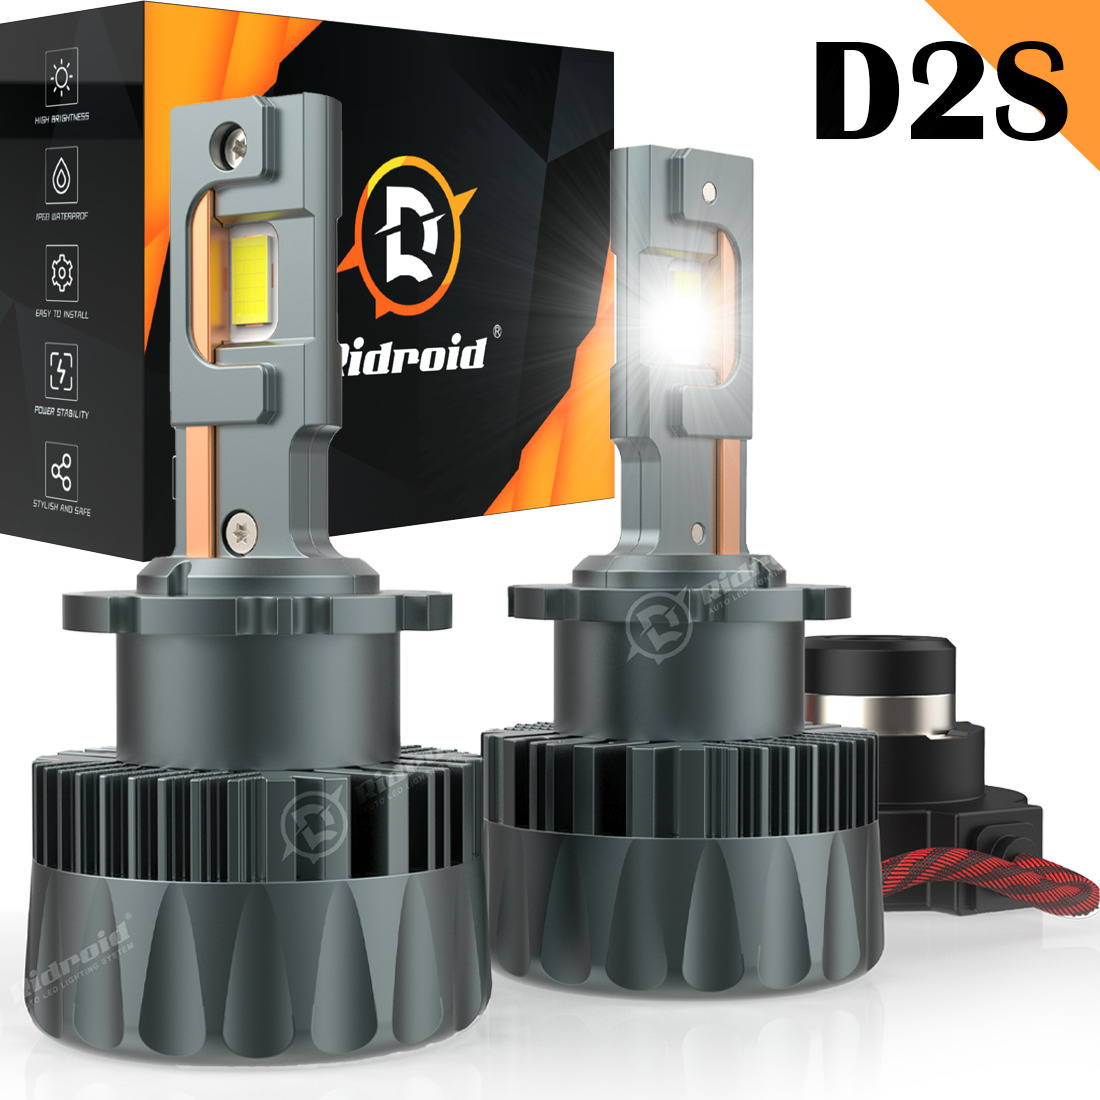 D2R D2S D2C LED Headlight Canbus Bulb 80W 8000LM +580% Brightness Plug and Play